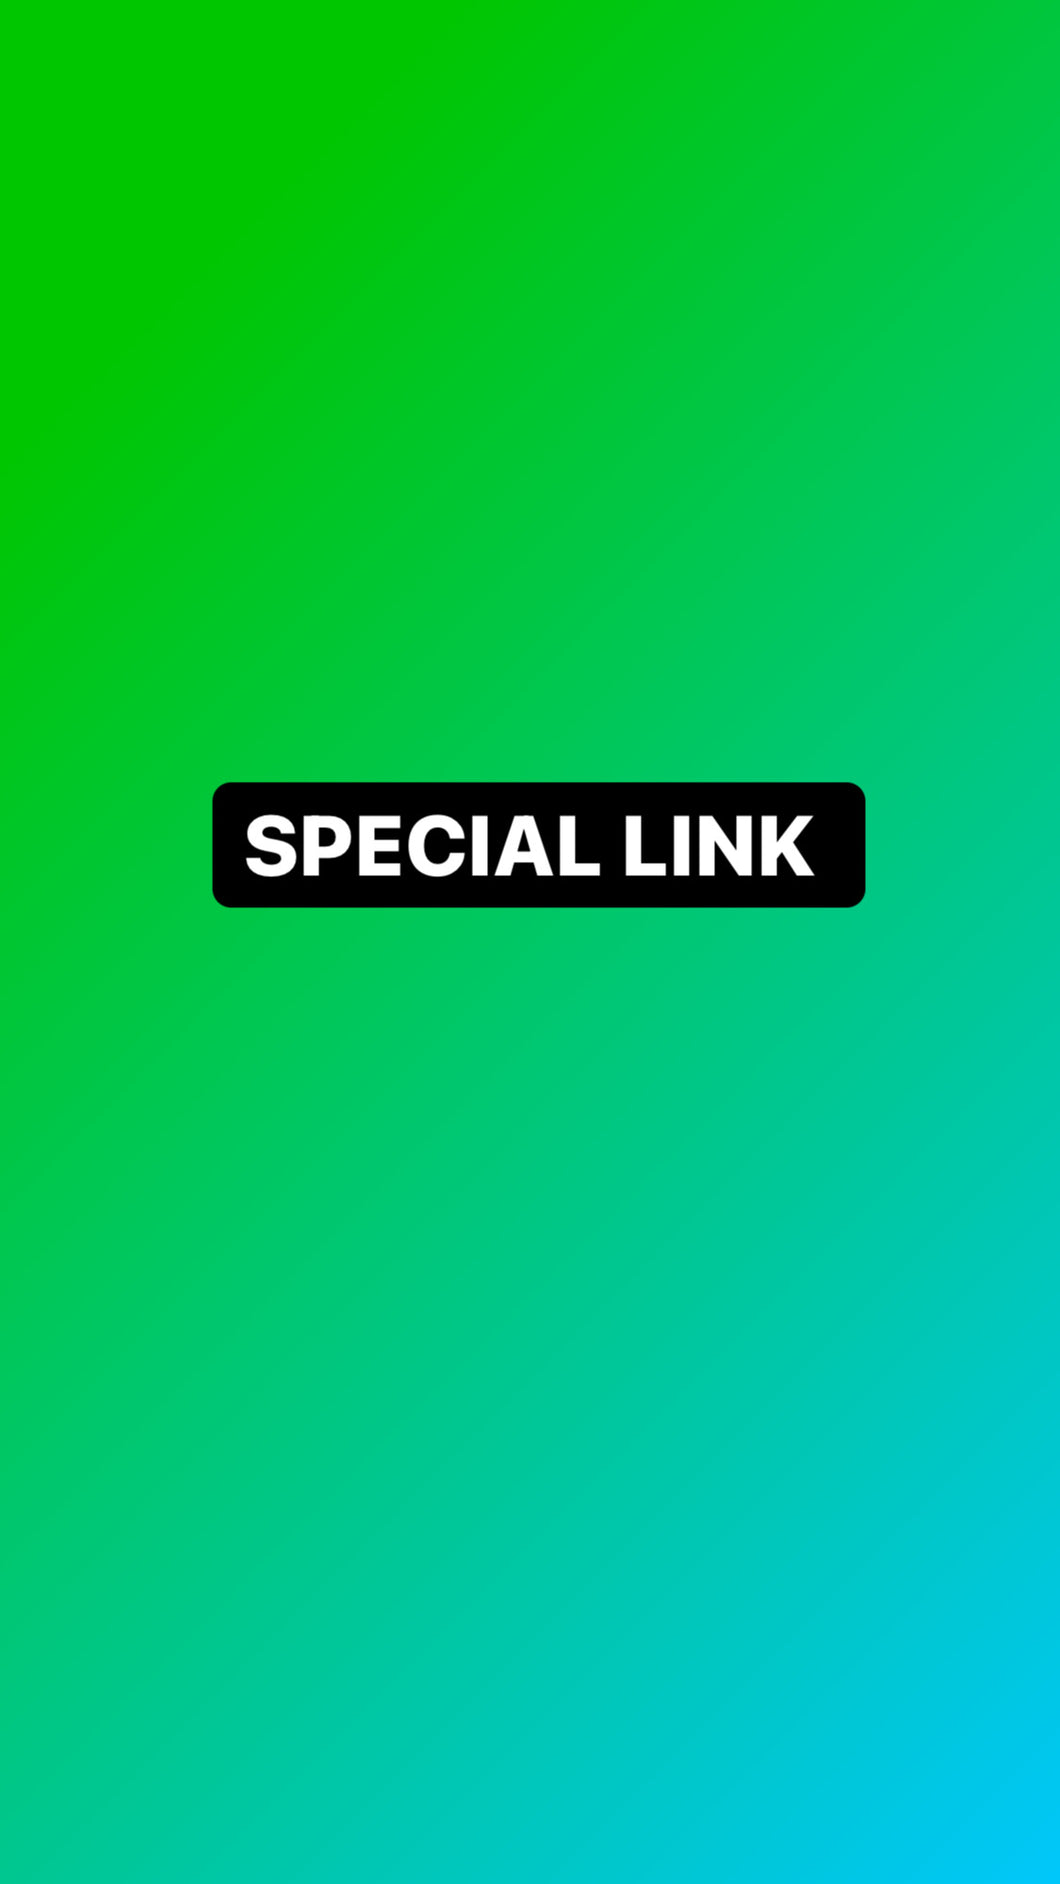 Special link